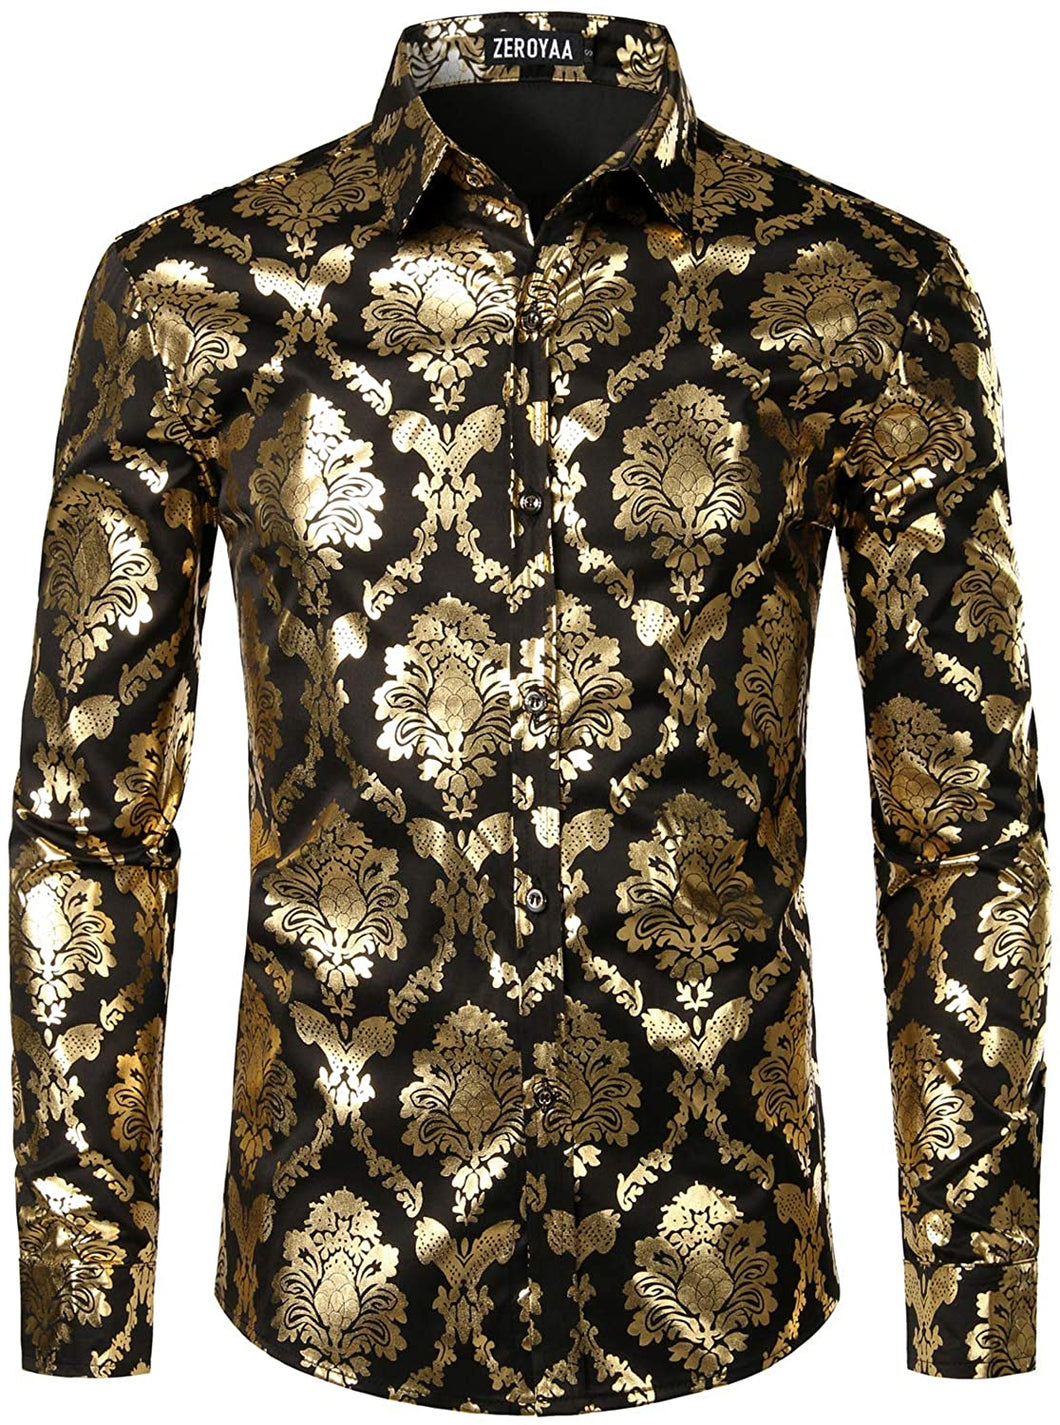 Men's Luxury Baroque Shiny Black & Gold Long Sleeve Button Up Shirt